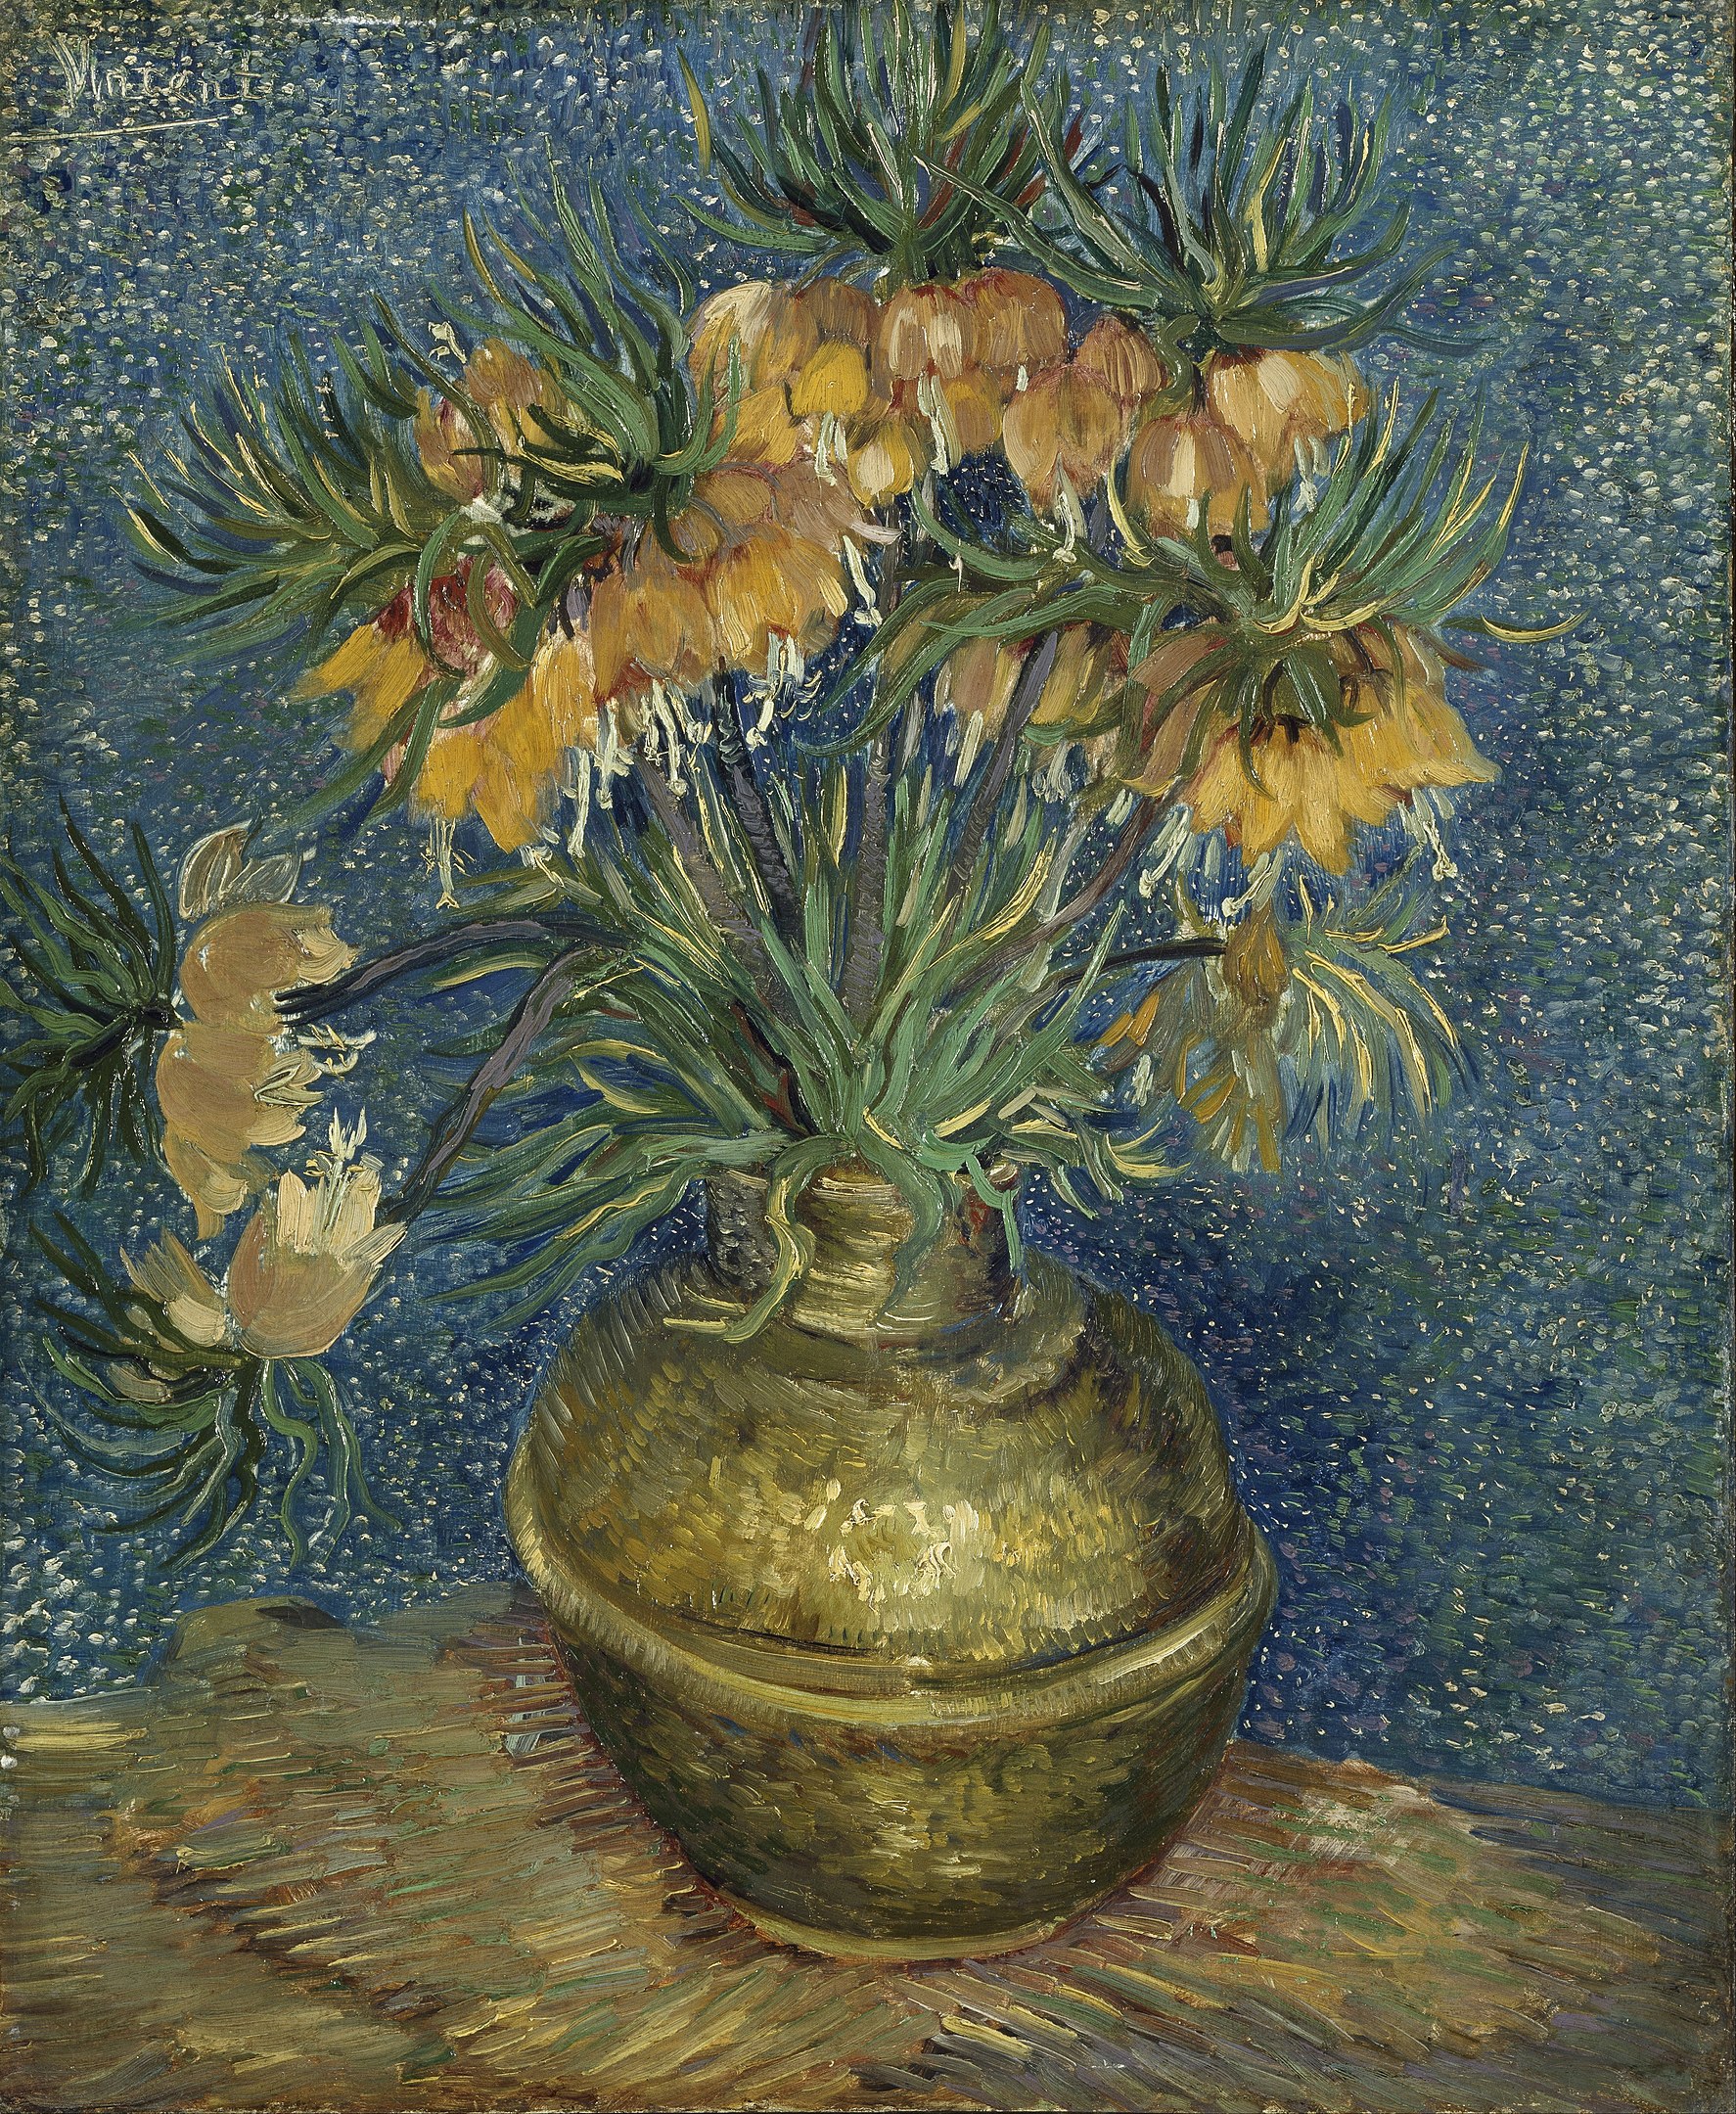 Bakır Vazoda İmparatorluk Lâleleri(orig. "Imperial Fritillaries in a Copper Vase") by Vincent van Gogh - 1887 - 60 x 76 cm Musée d'Orsay